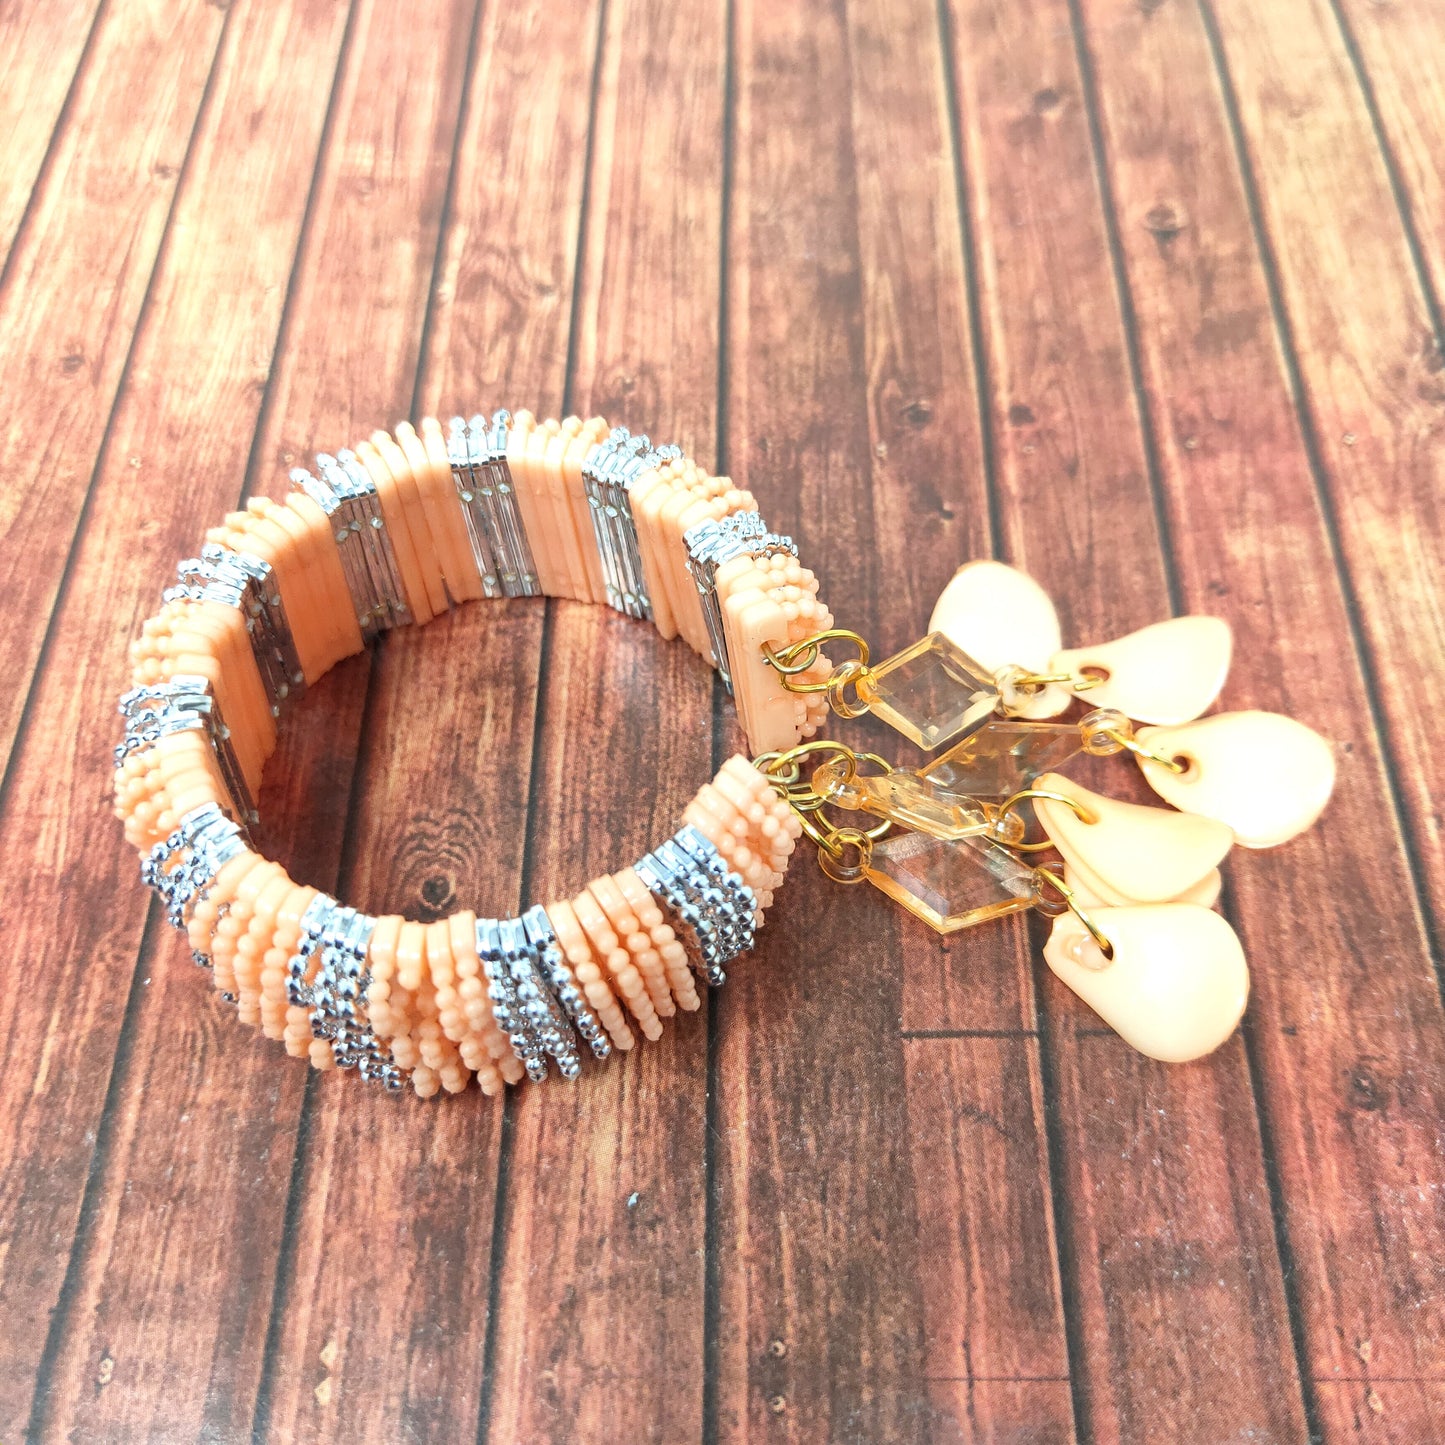 Anokhi Ada Plastic Beads Stylish Latkan Cuff Bangle Bracelet for Kids and Girls (AO-08 Bracelet)